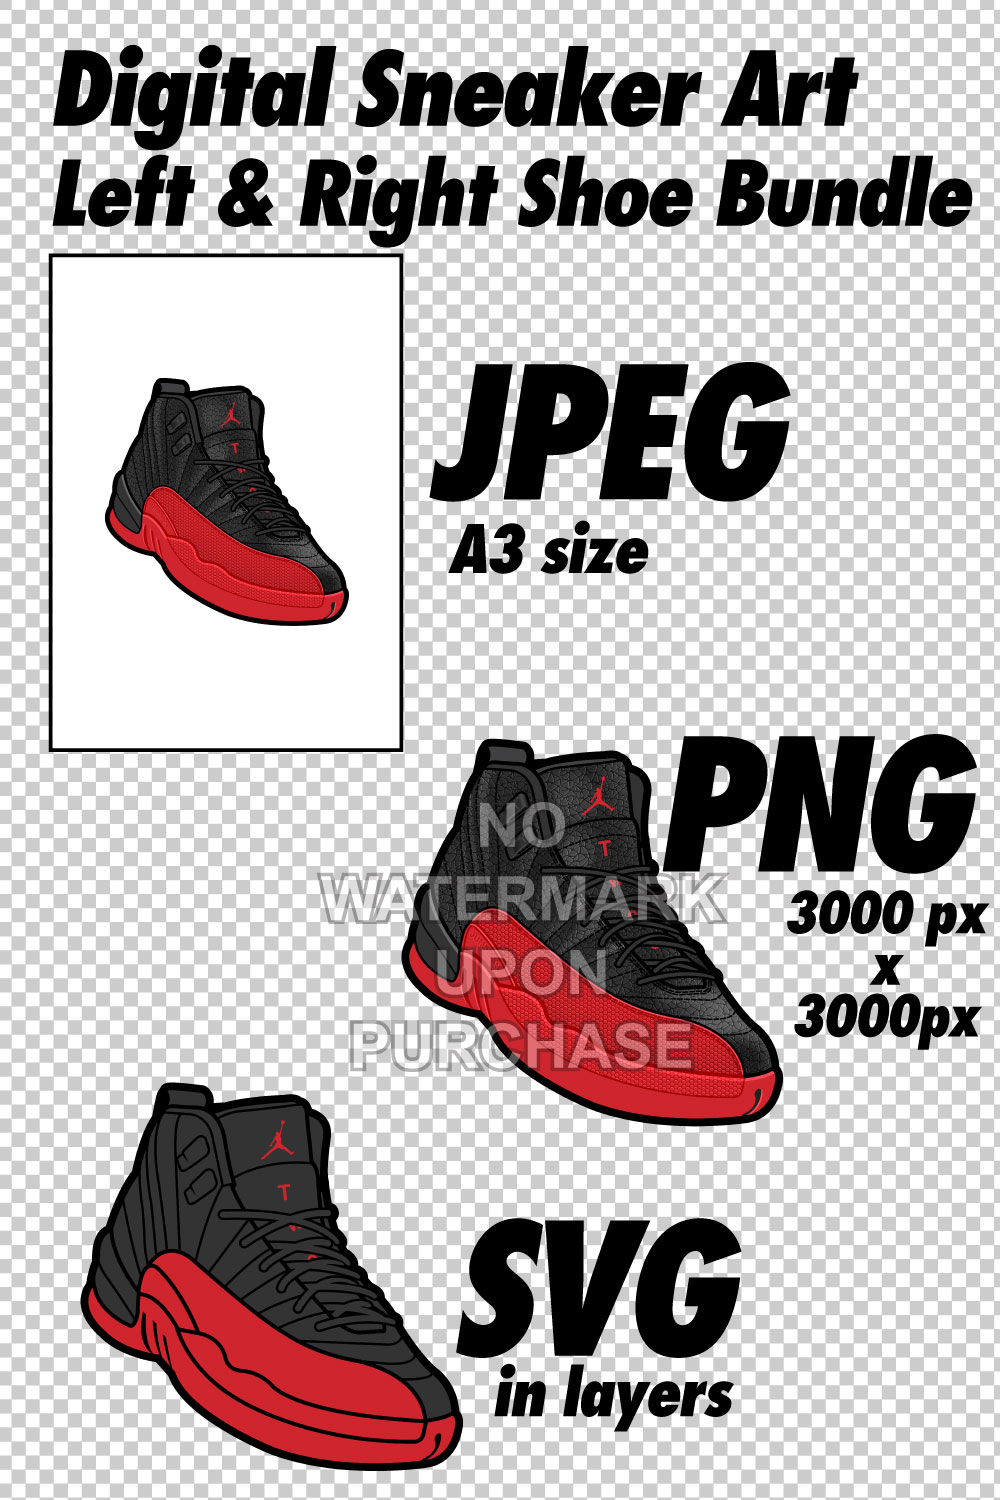 Air Jordan 12 Flu Game JPEG PNG SVG Sneaker Art right & left shoe bundle Digital Download pinterest preview image.